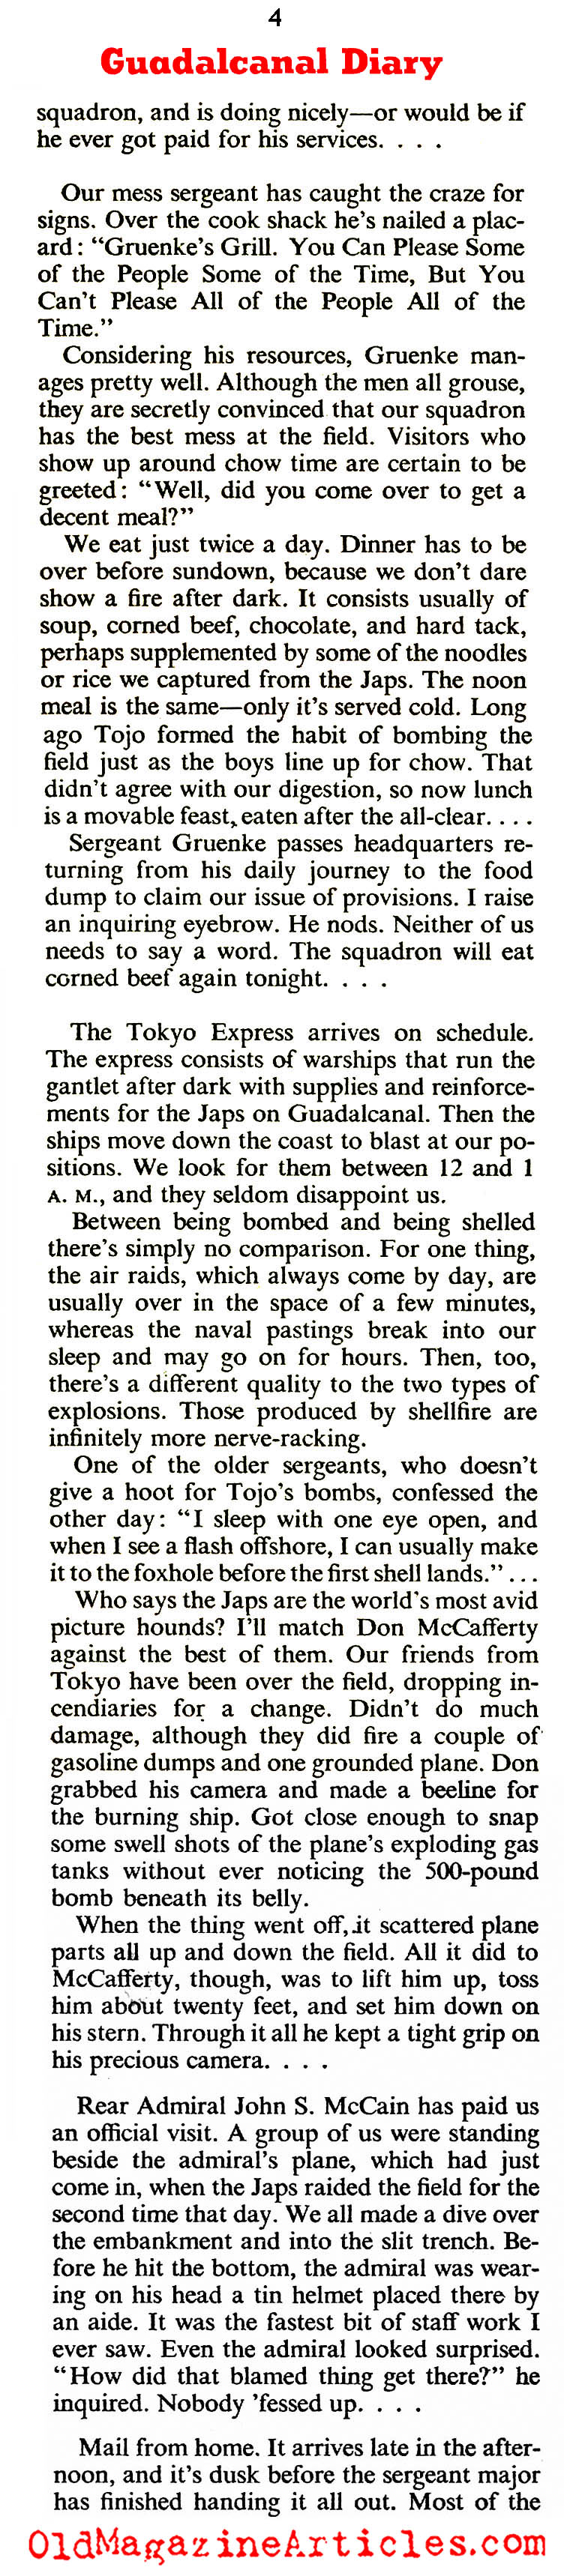 ''Guadalcanal Diary'' (The American Magazine, 1943)